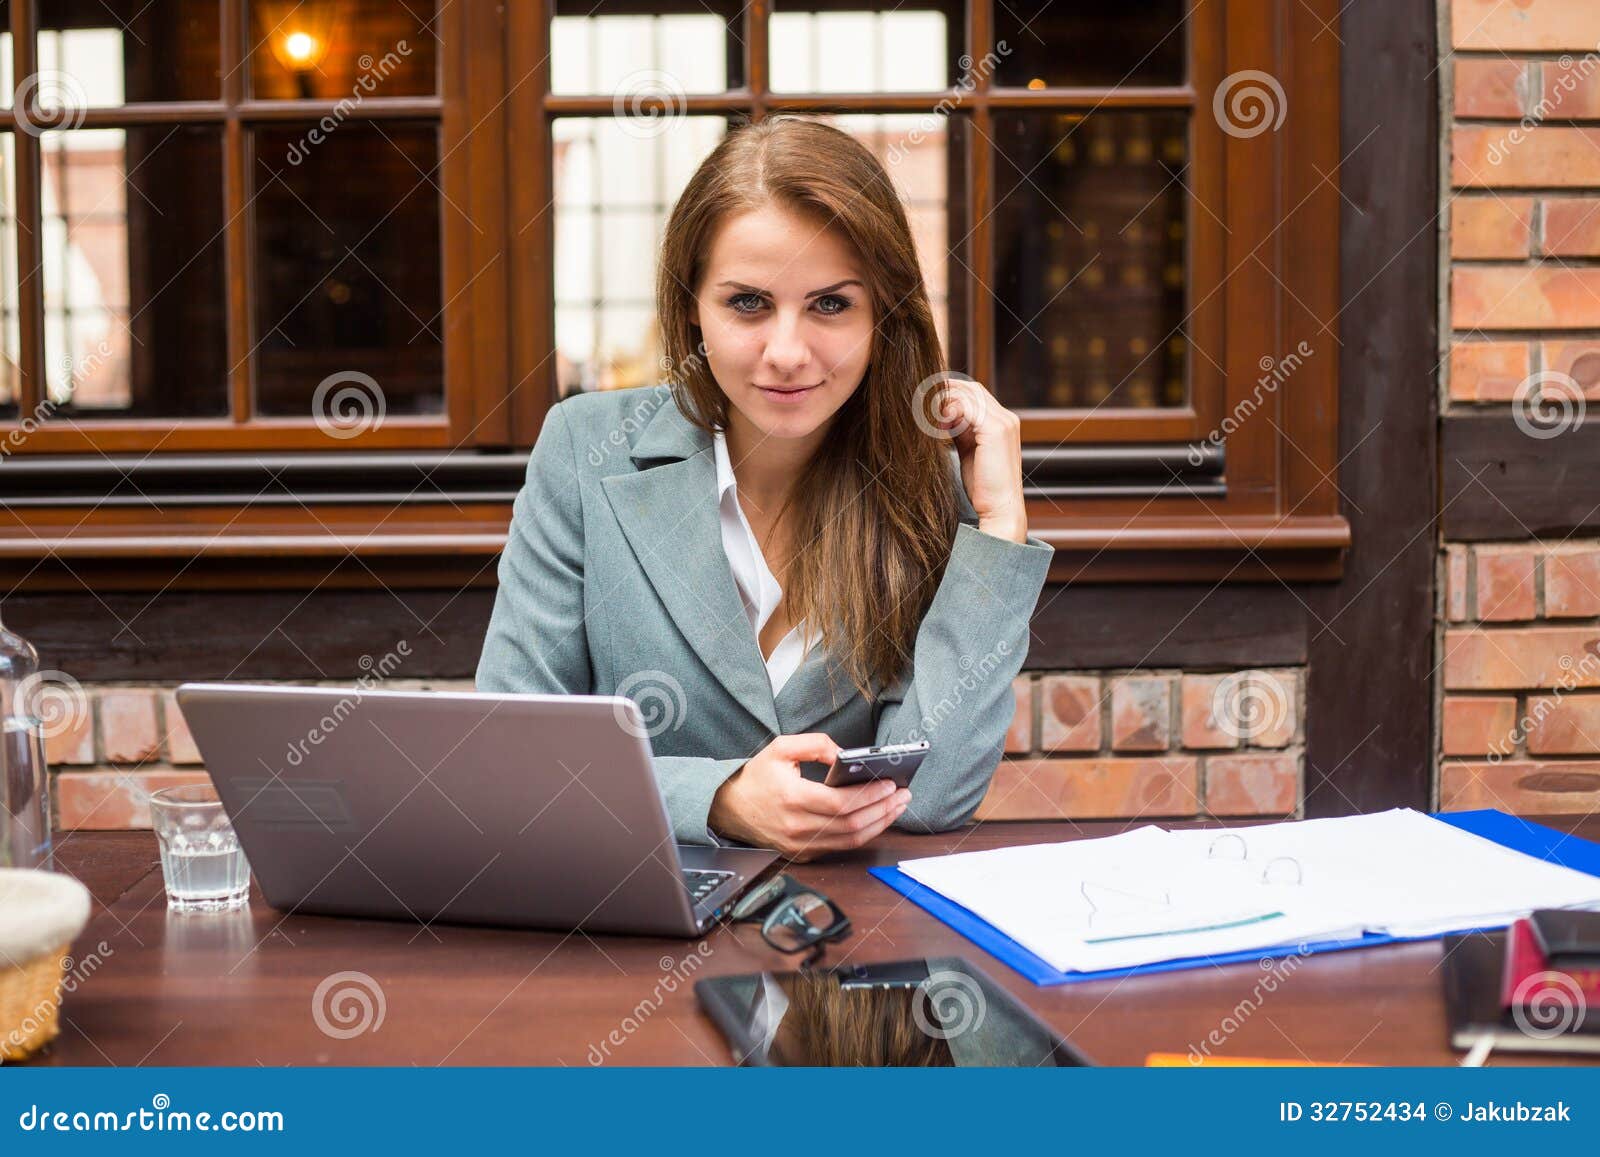 Студентка коммерсантка и просто красавица читать. Businesswoman in a Restaurant. Businesswoman Laptop Office.